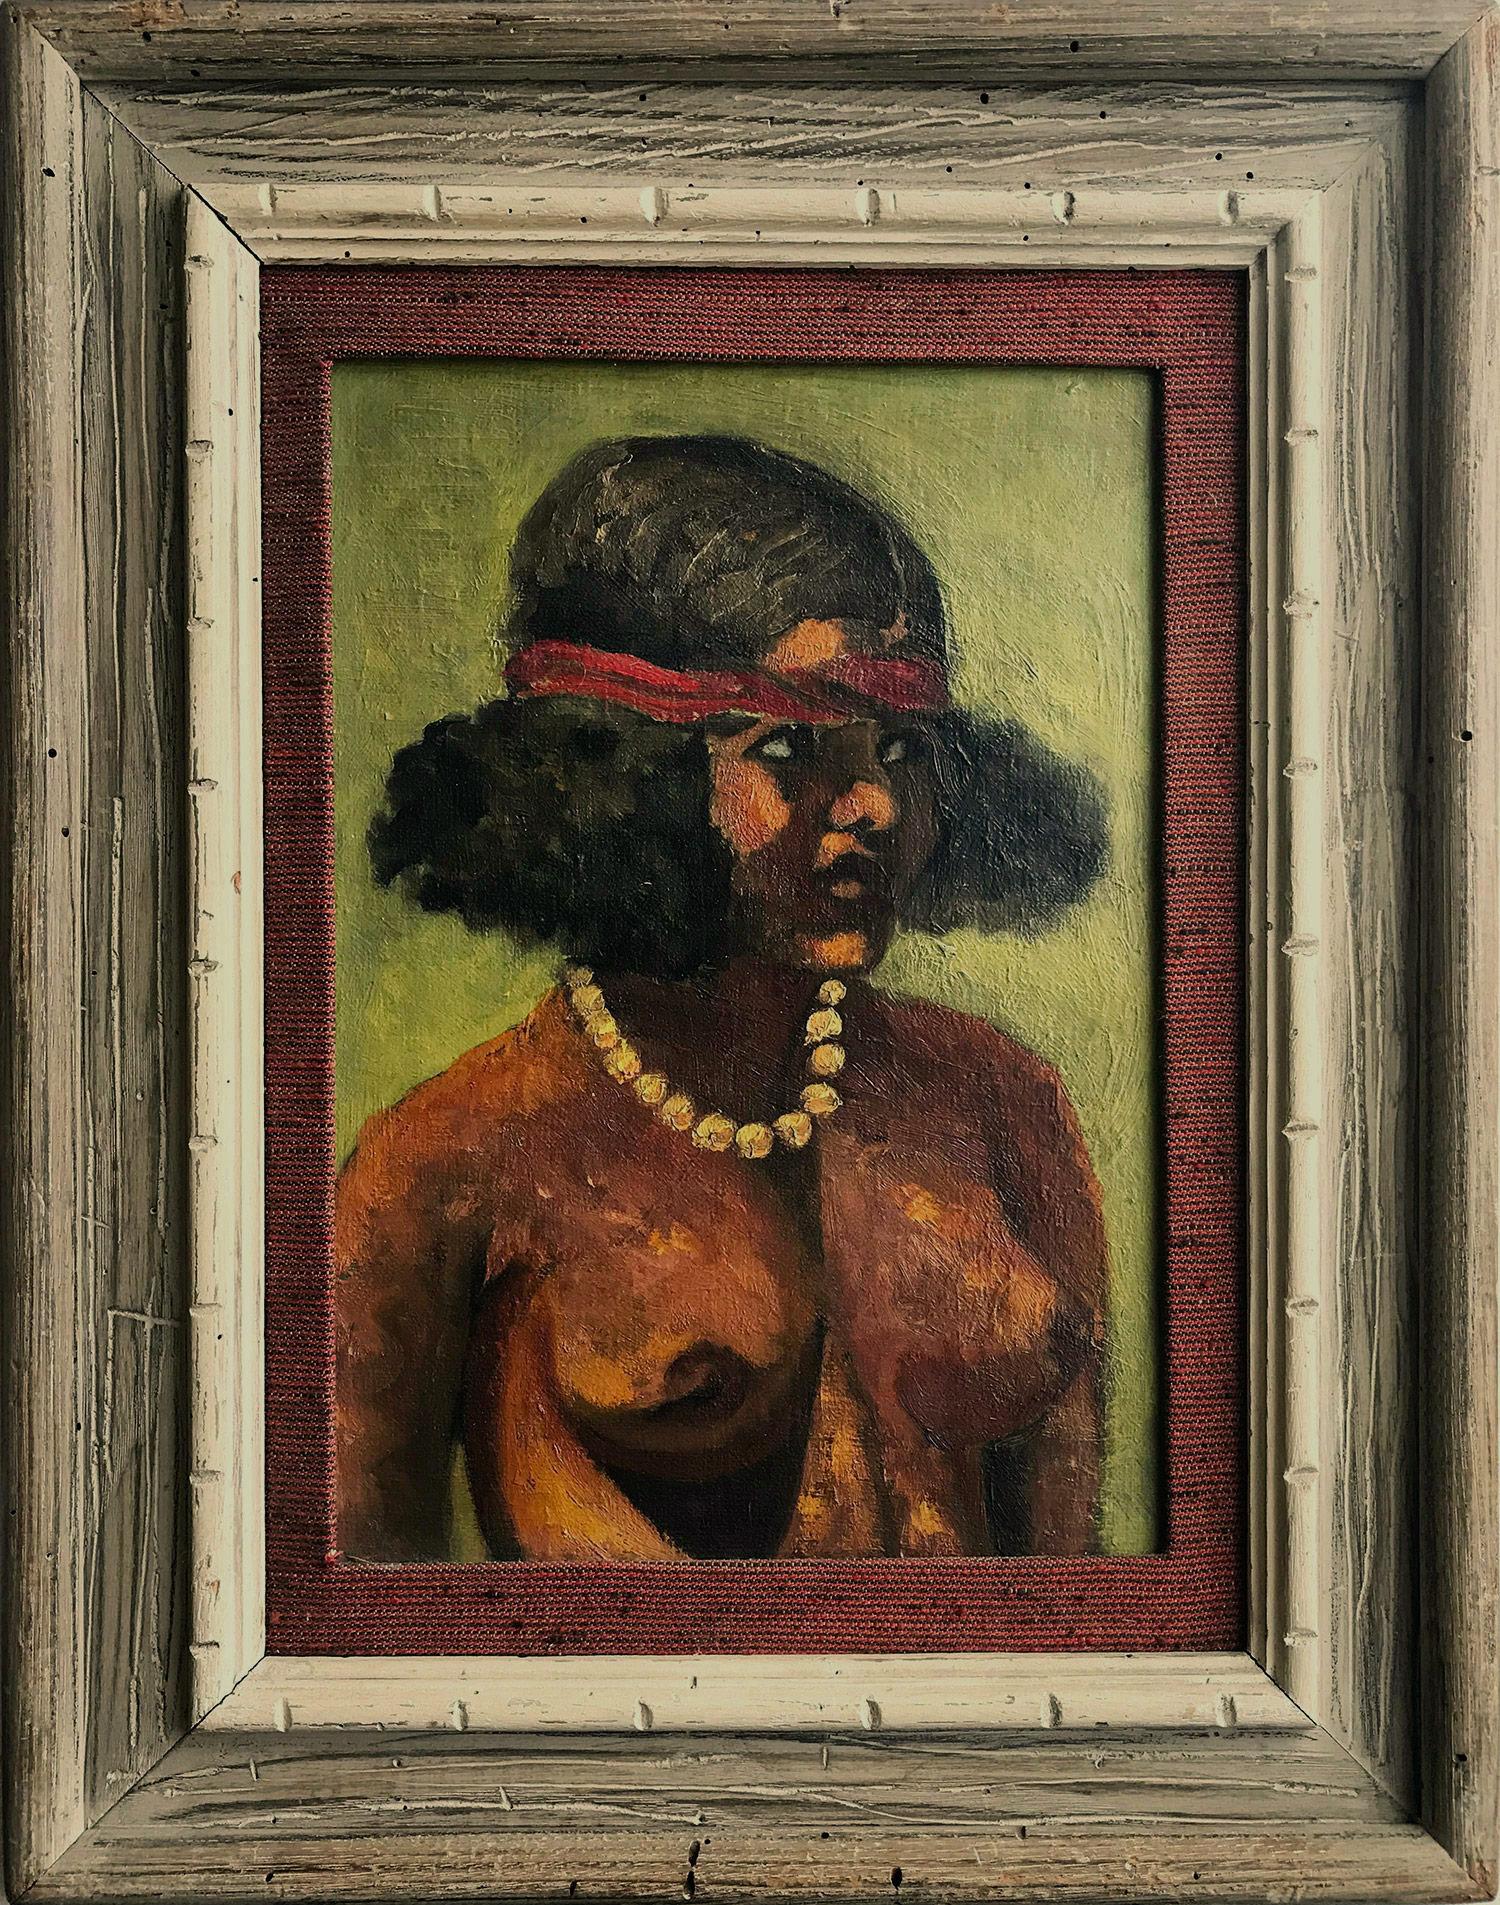 Julio Moisés Fernández de Villasante Nude Painting - "Modernist Female Nude with Pearls" Mid-20th Century Oil Painting on Canvas